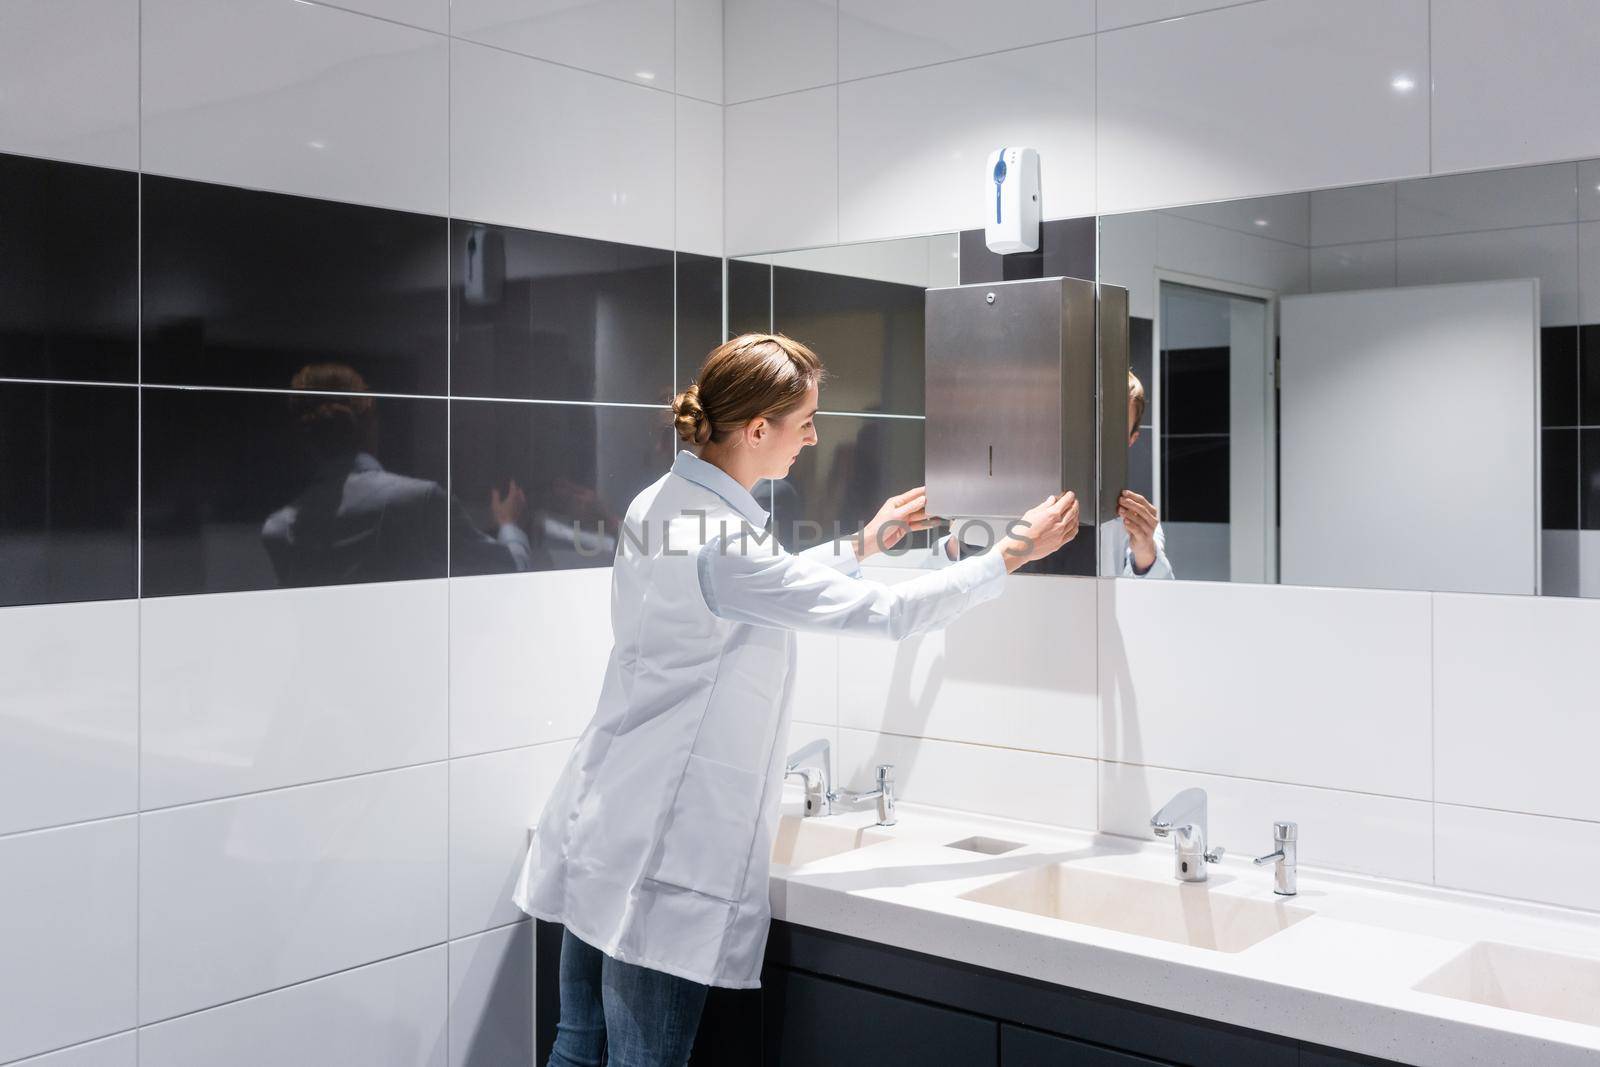 Cleaning woman refilling paper towels in public toilet by Kzenon